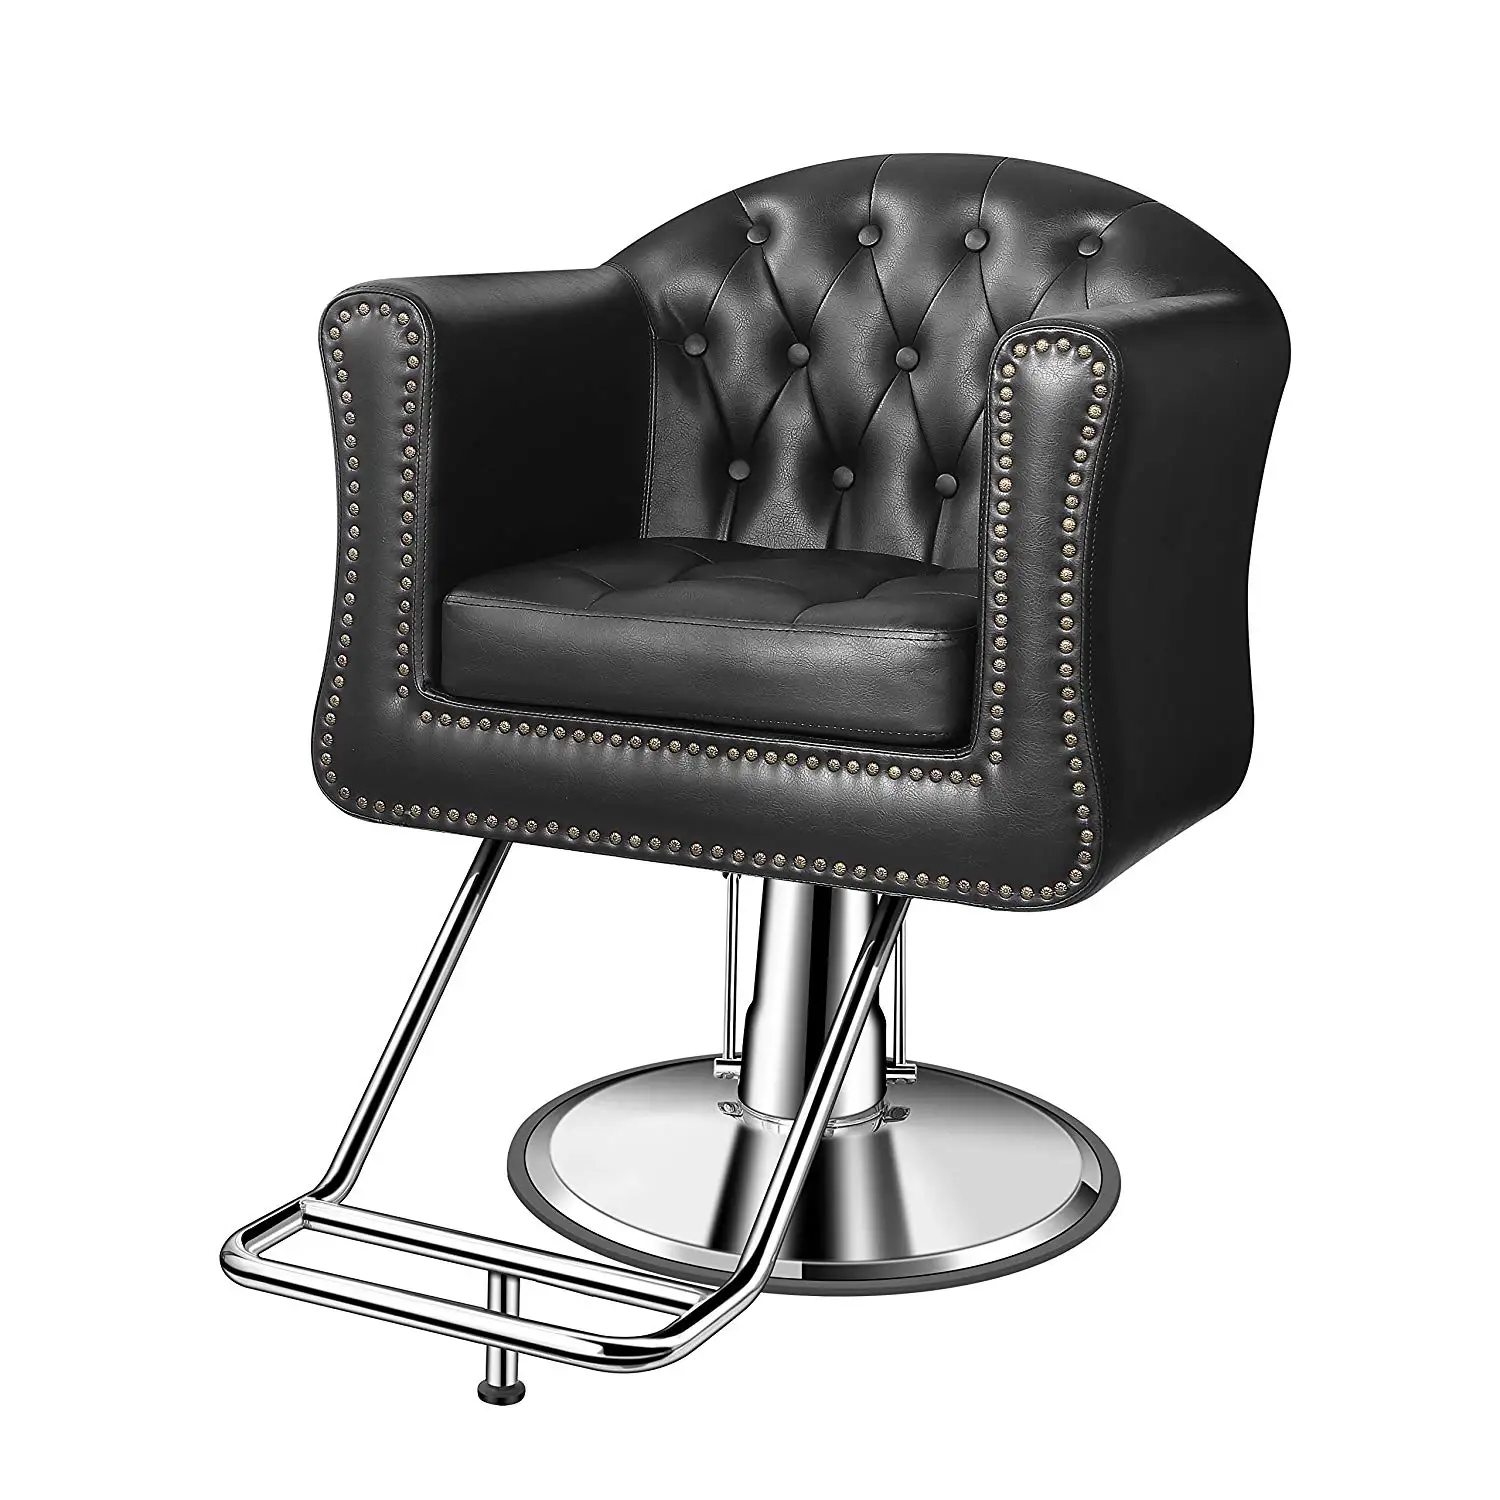 Cheap Salon Chair, find Salon Chair deals on line at Alibaba.com